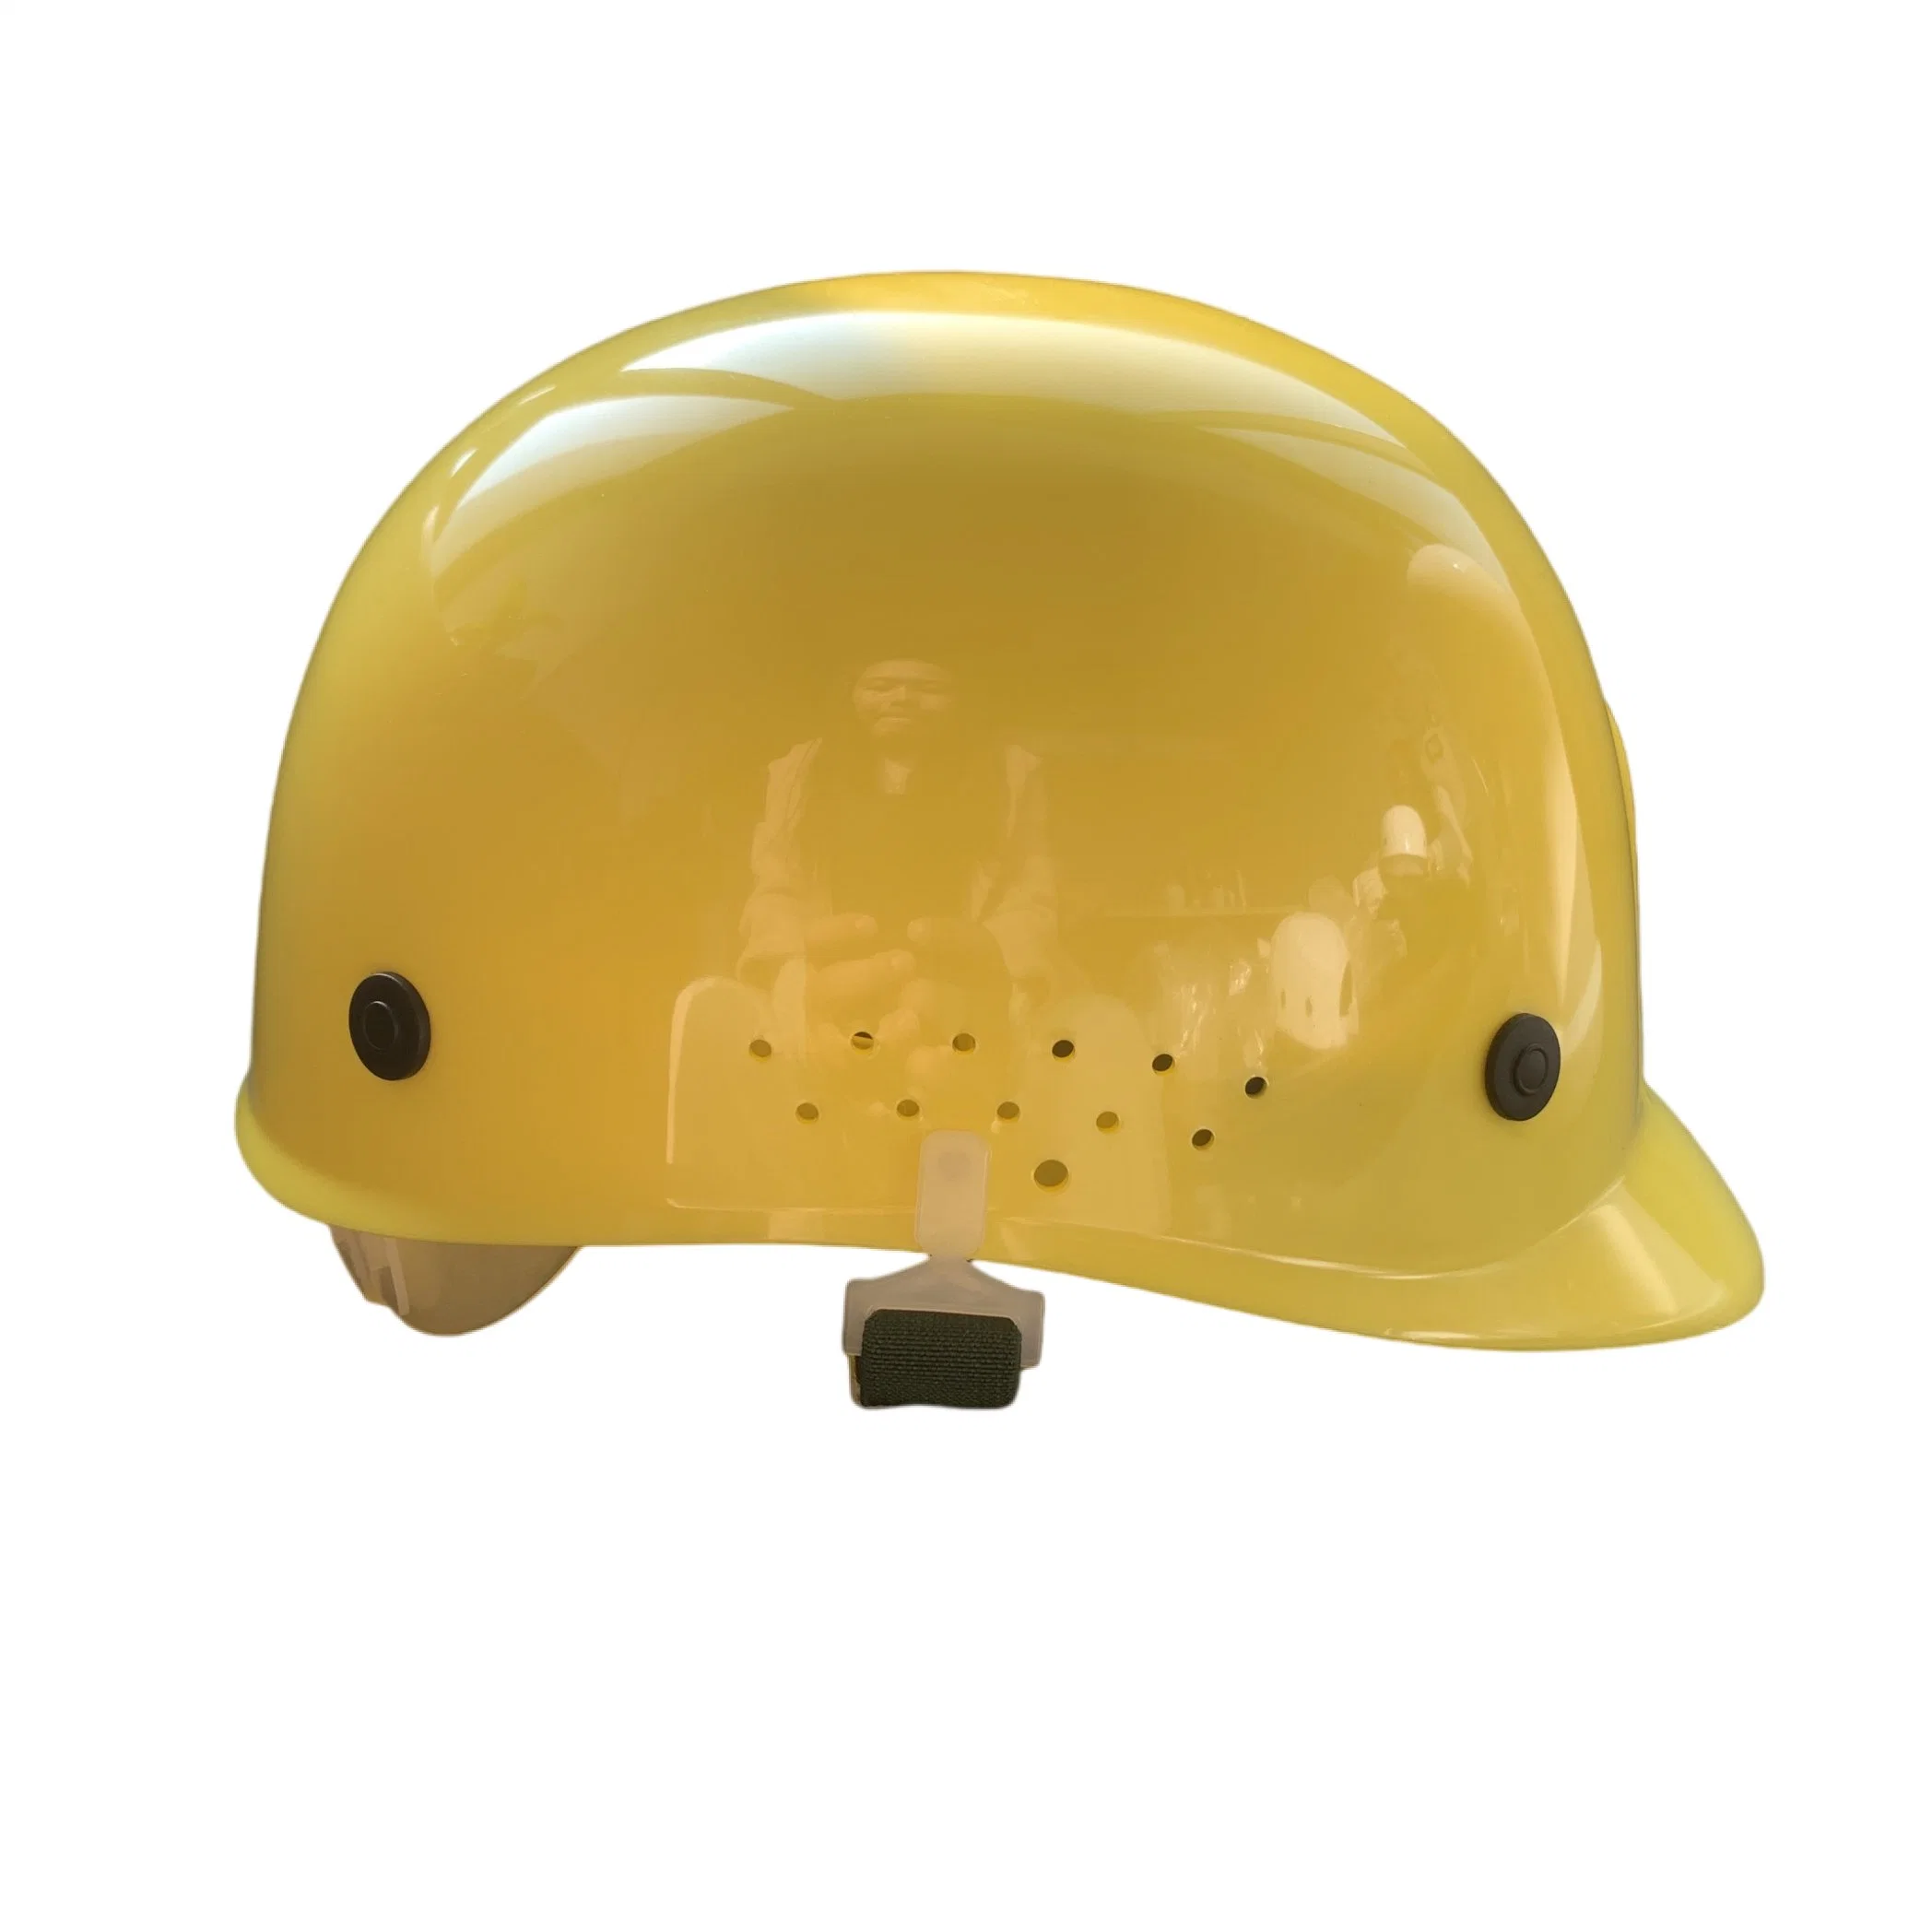 Plastic En397 Industrial Construction Breathable Safety Helmet Bump Cap